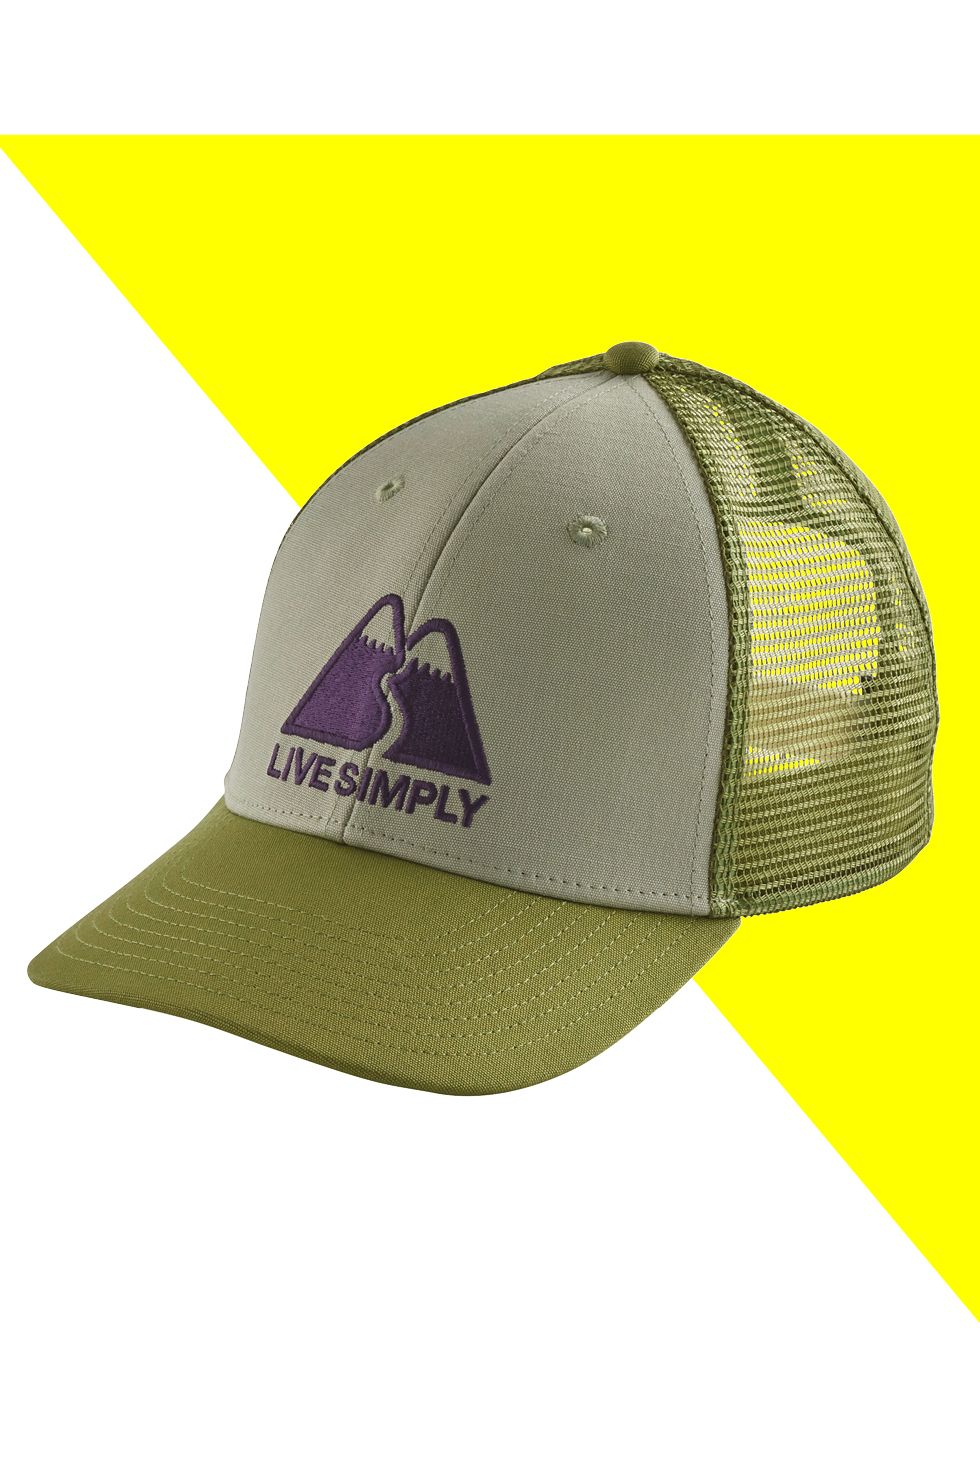 Cap, Clothing, Trucker hat, Green, Yellow, Baseball cap, Headgear, Hat, Fashion accessory, Logo, 